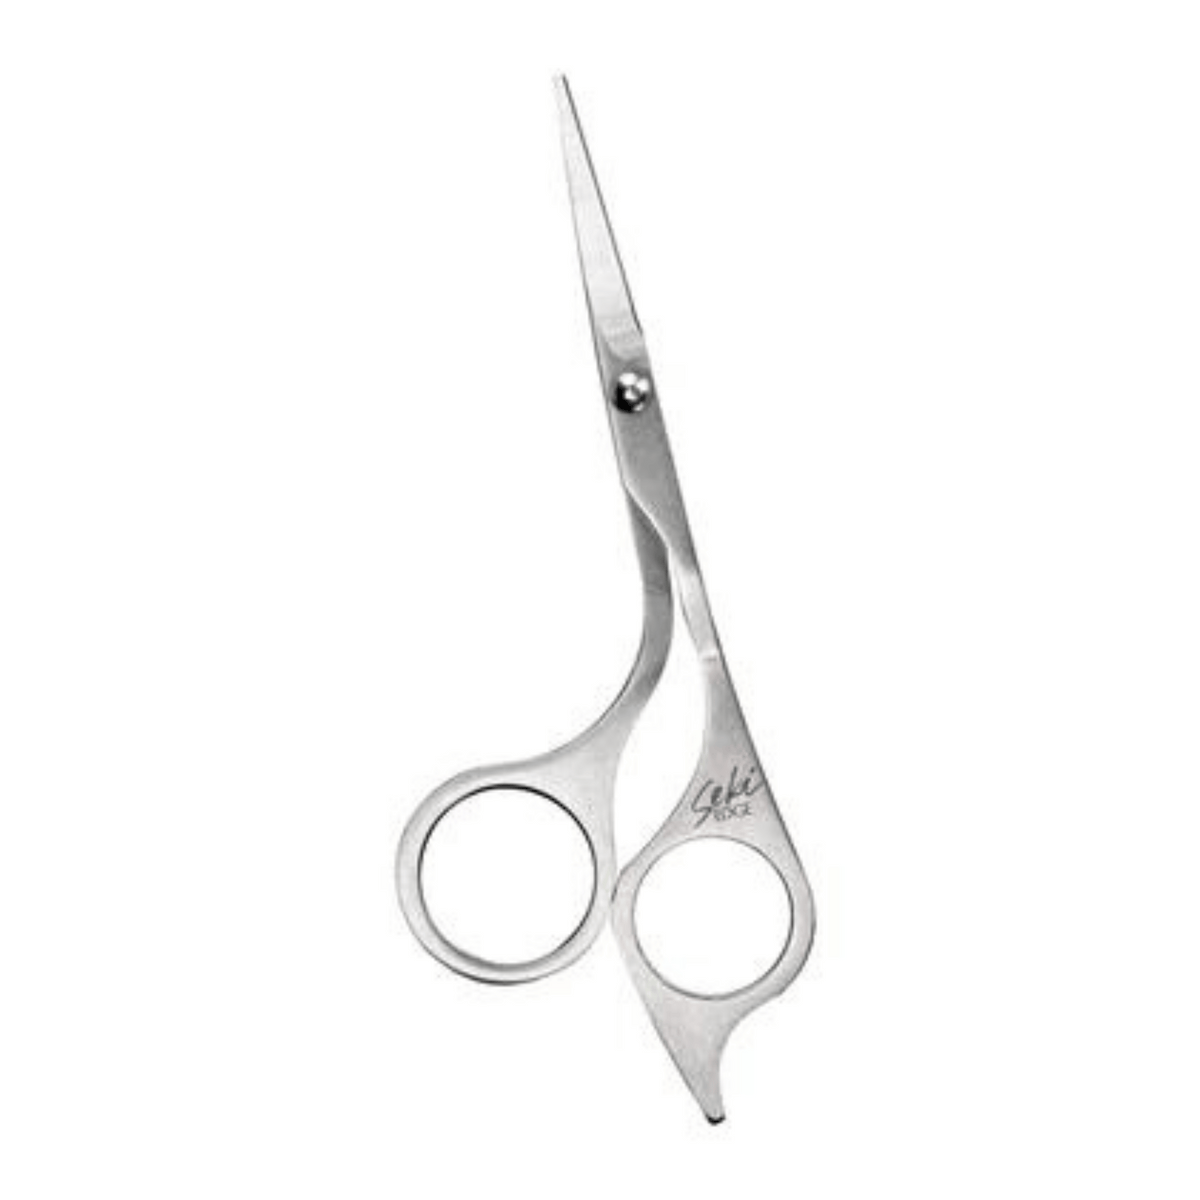 Primary Image of Grooming Scissors